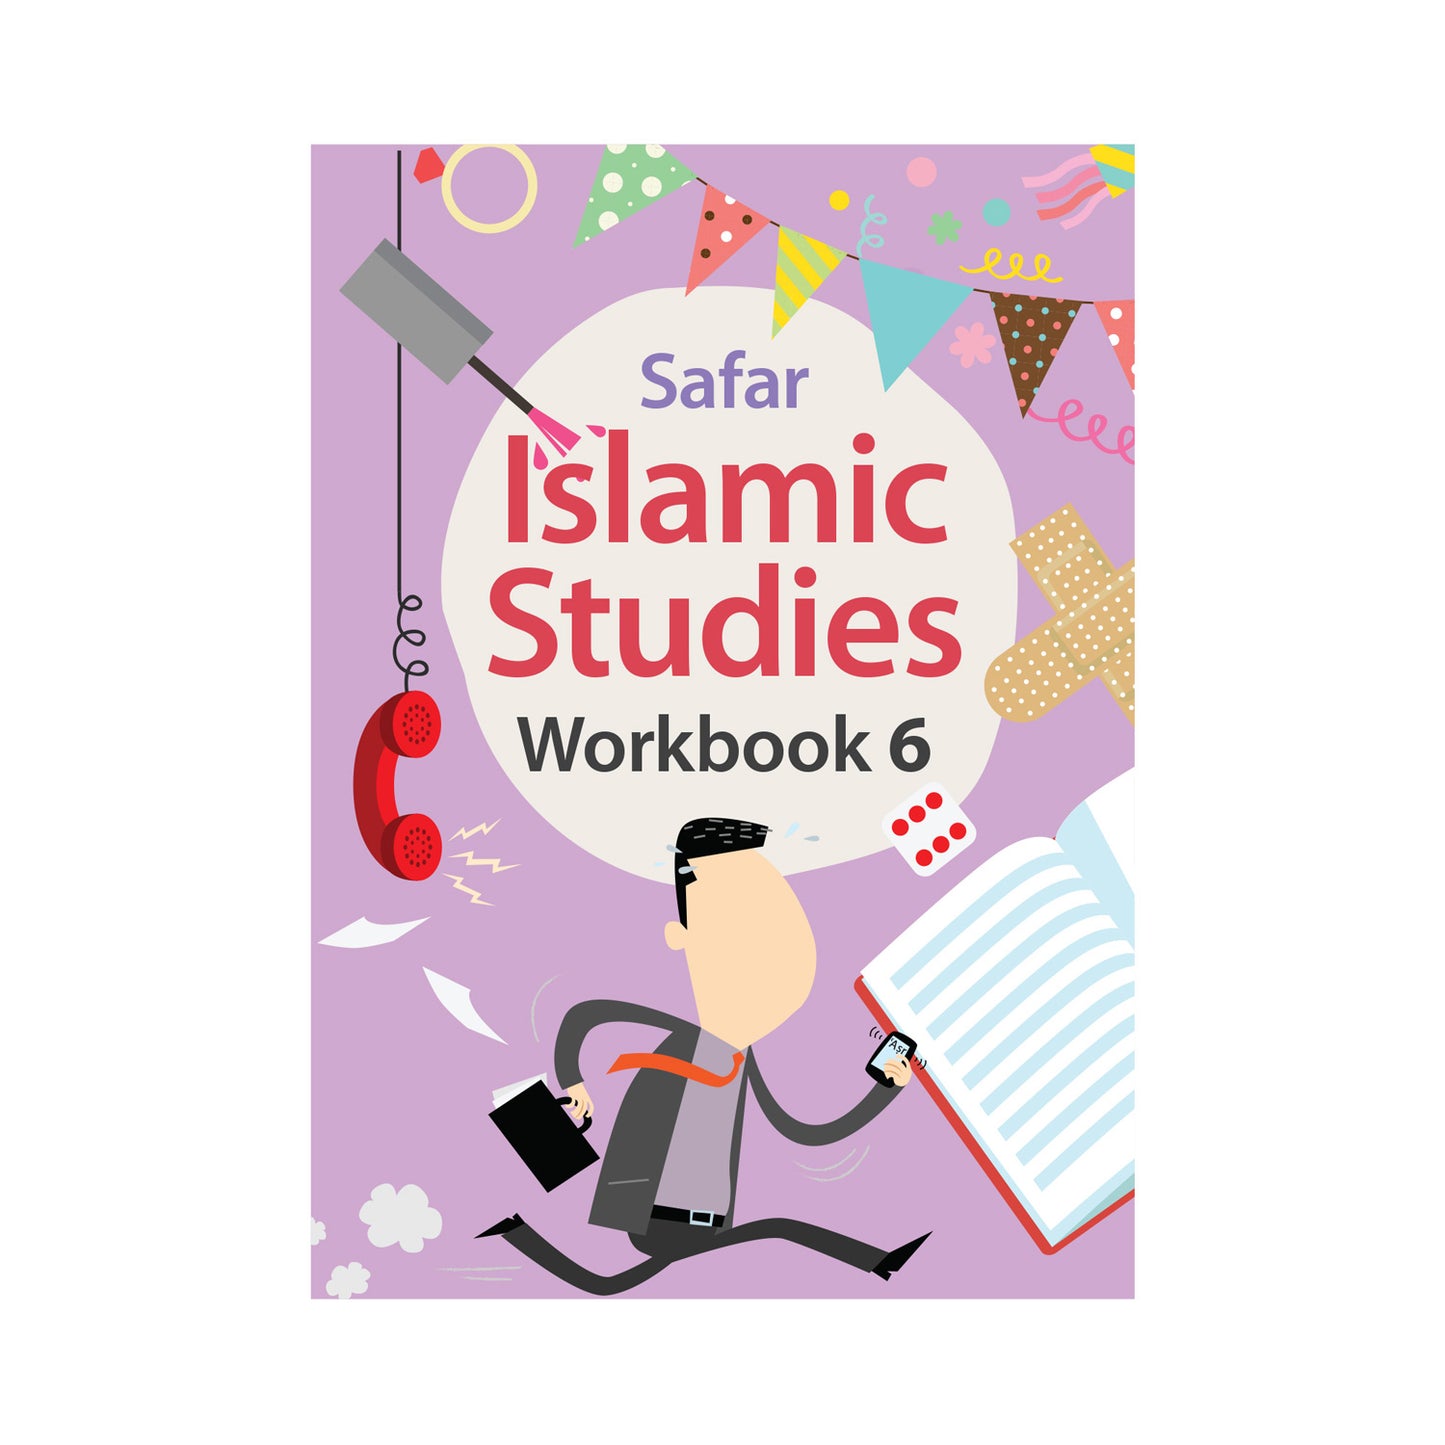 Islamic Studies: Workbook 6 – Learn about Islam Series by Safar